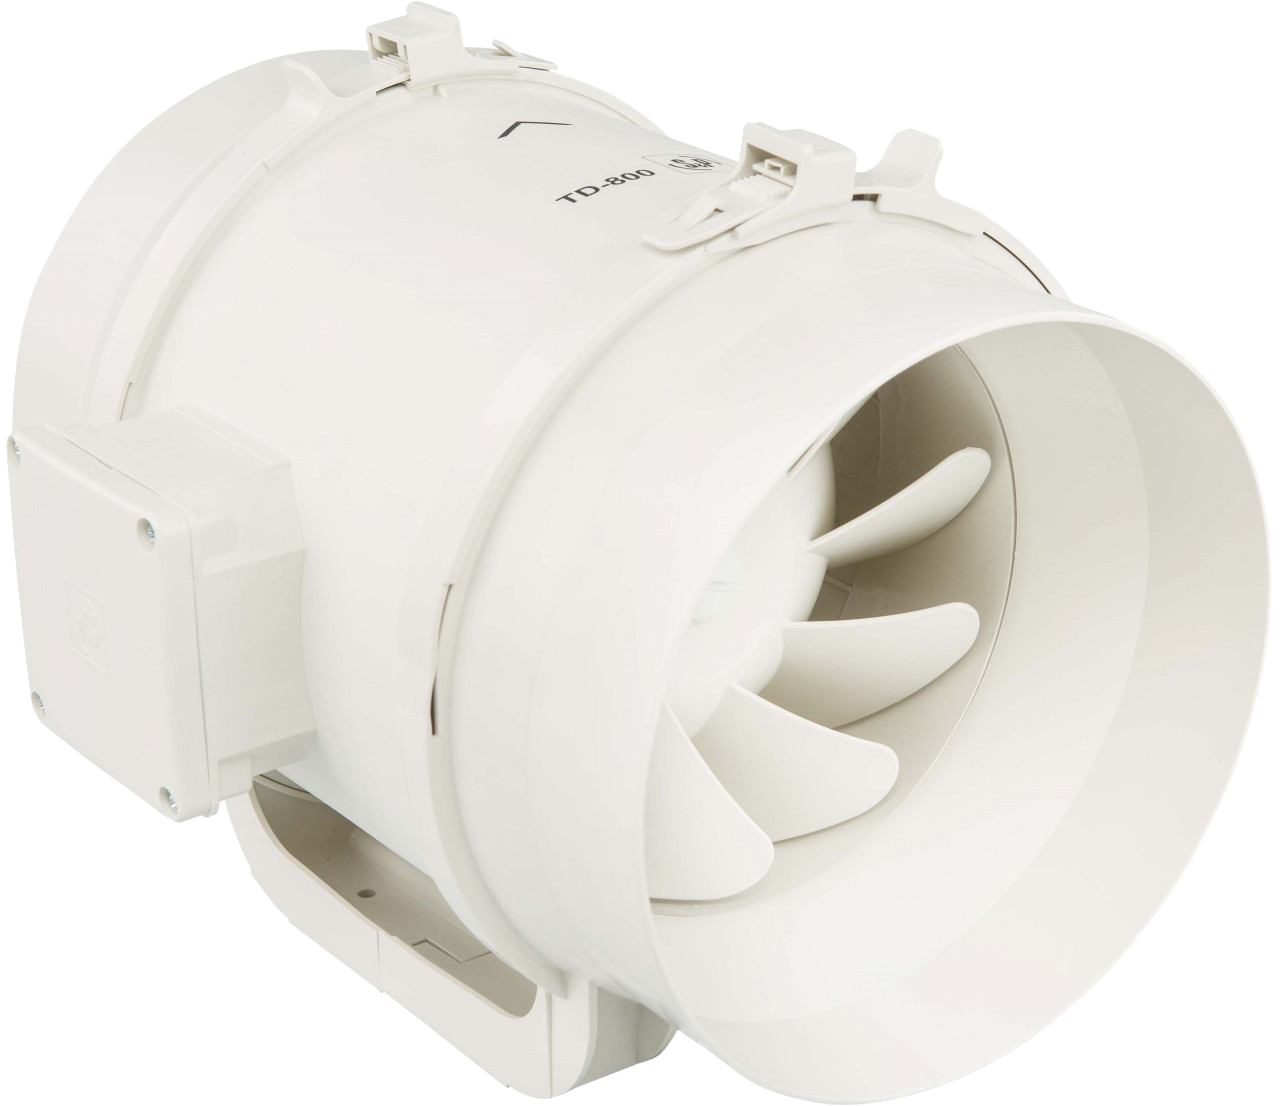 Канальный вентилятор для гаража Soler&Palau TD-800/200 T 3V (220-240V 50/60)